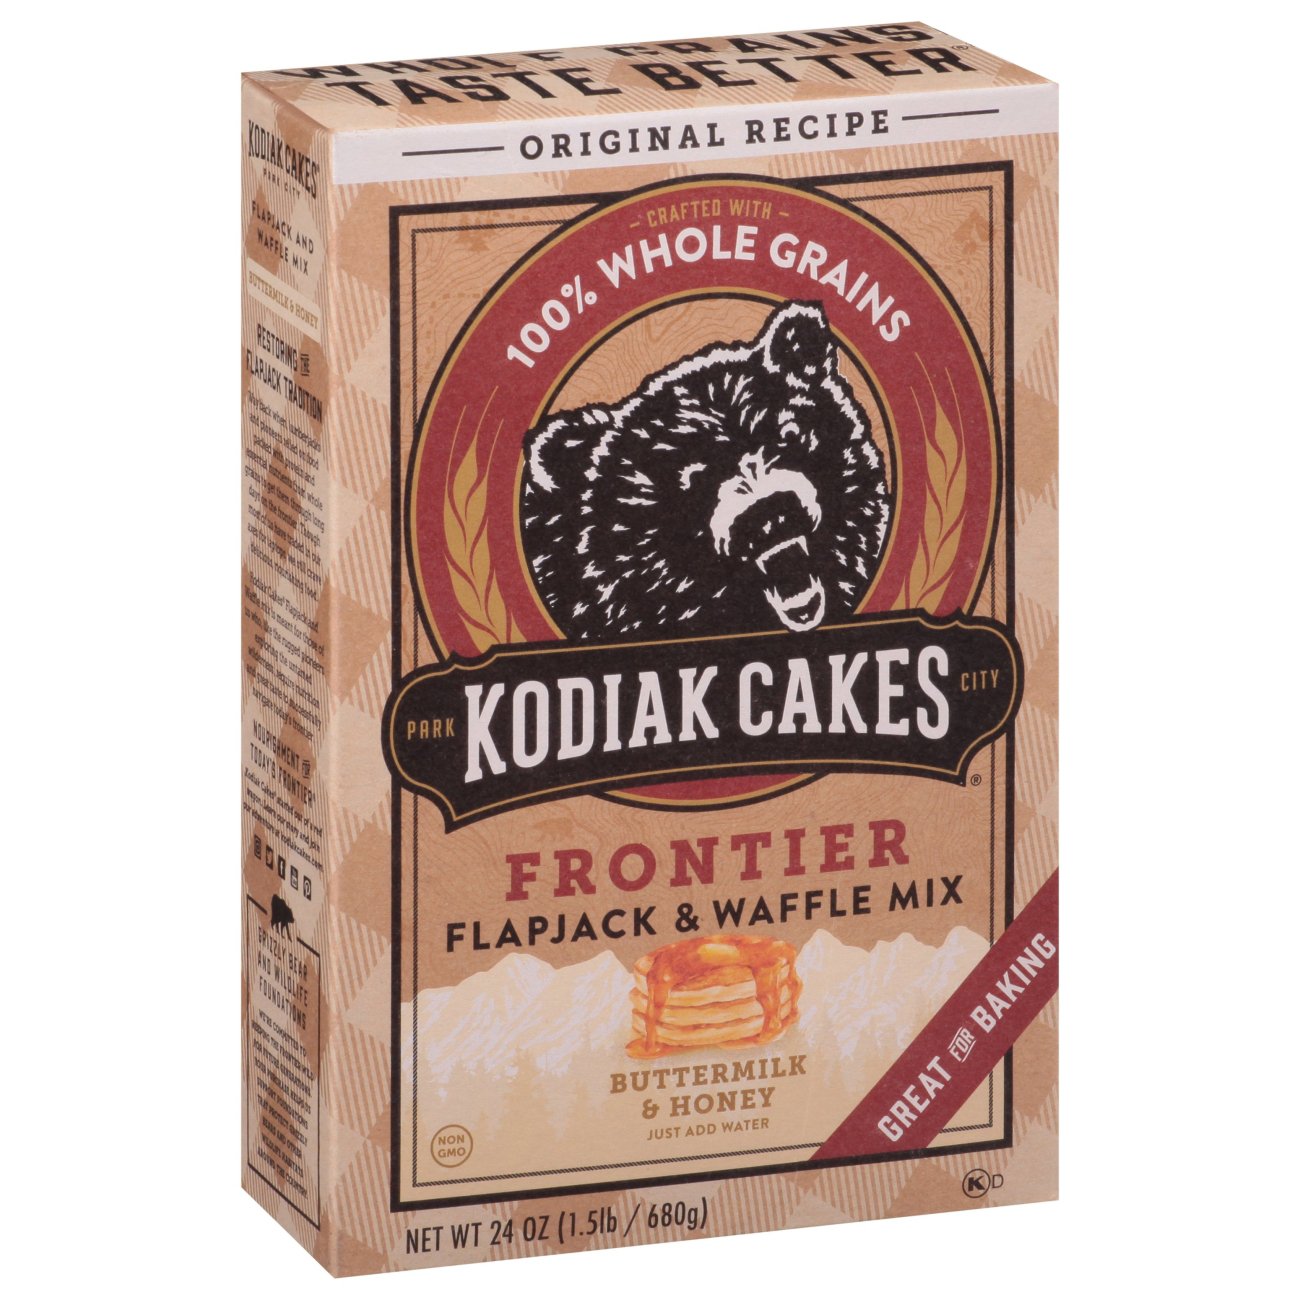 Pancake mix maker Kodiak Cakes acquired, 2021-05-25